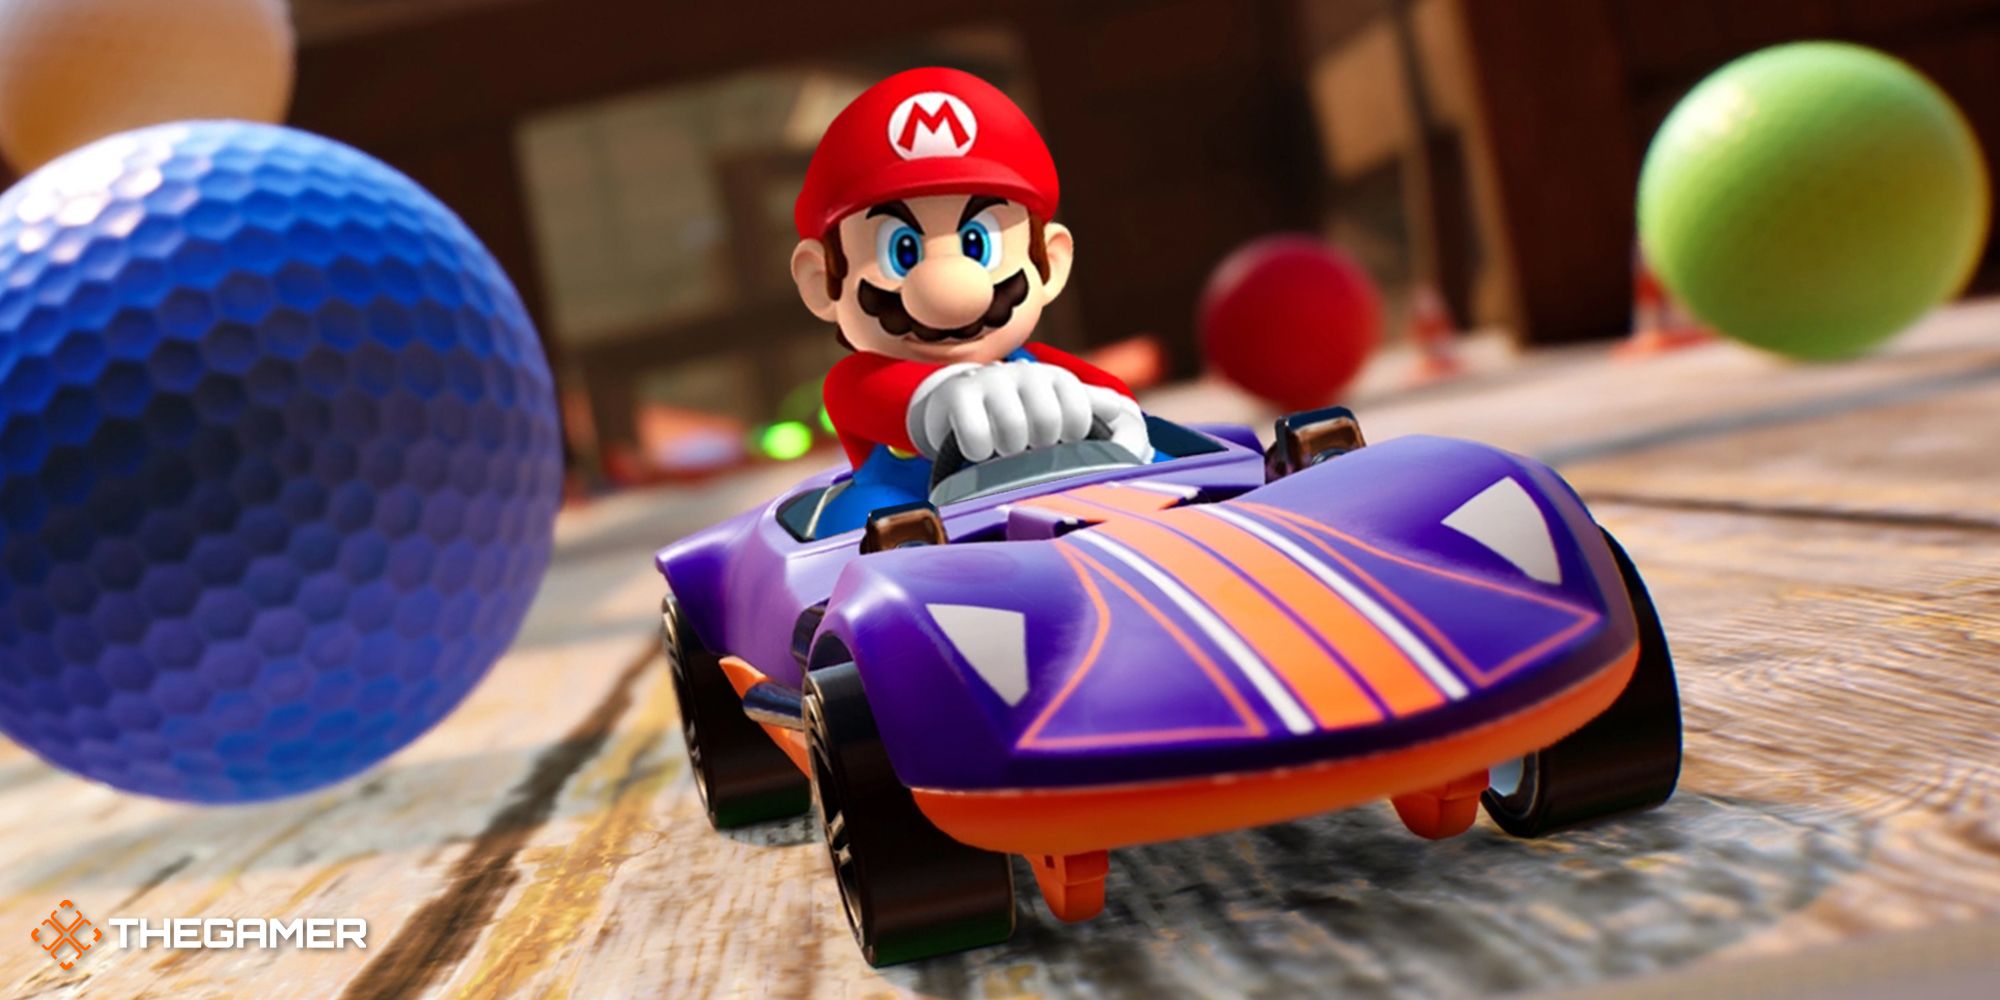 Mario riding a Hot Wheels 2 Unleashed car